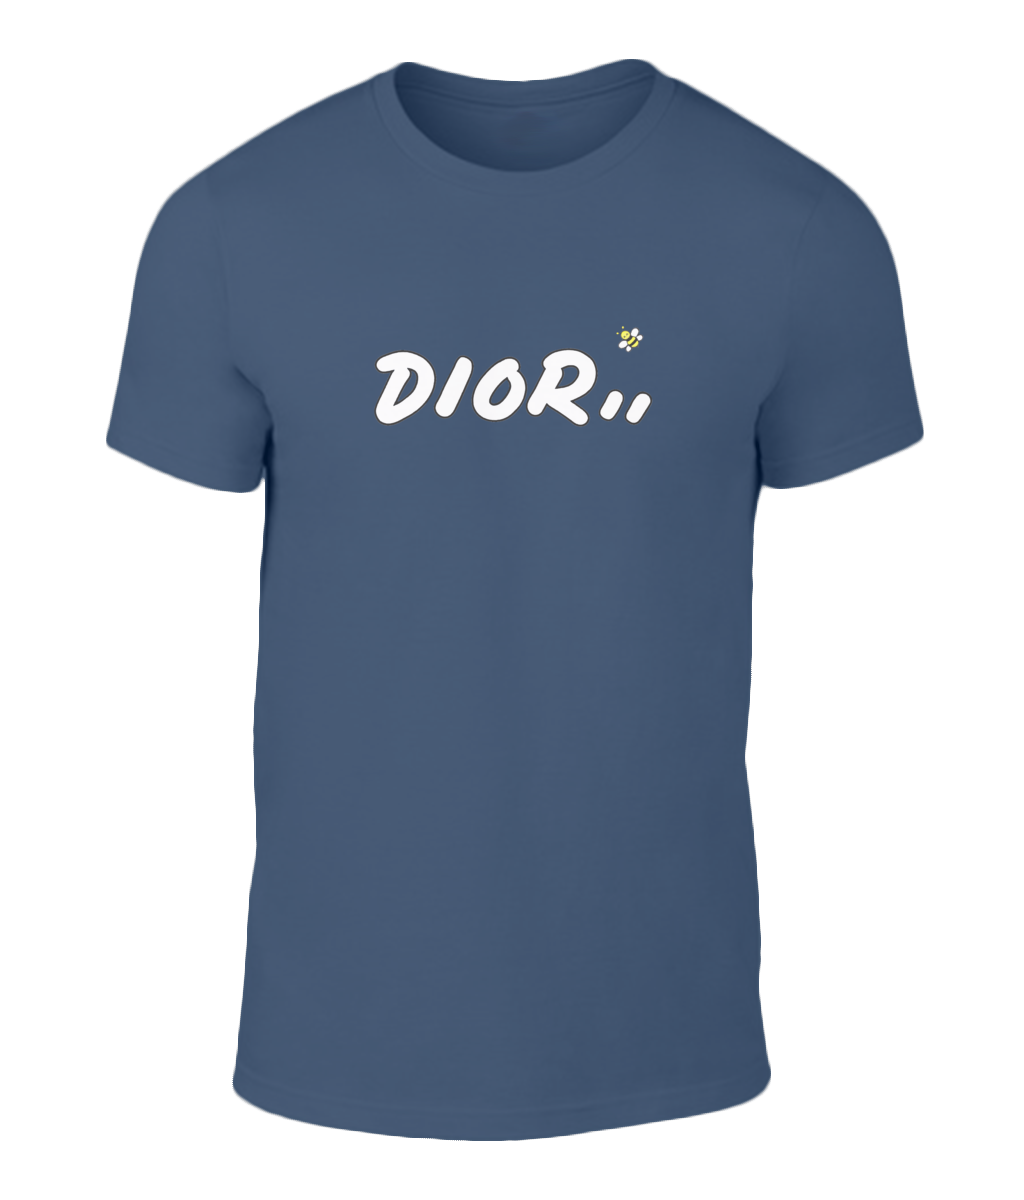 dior shirt mens